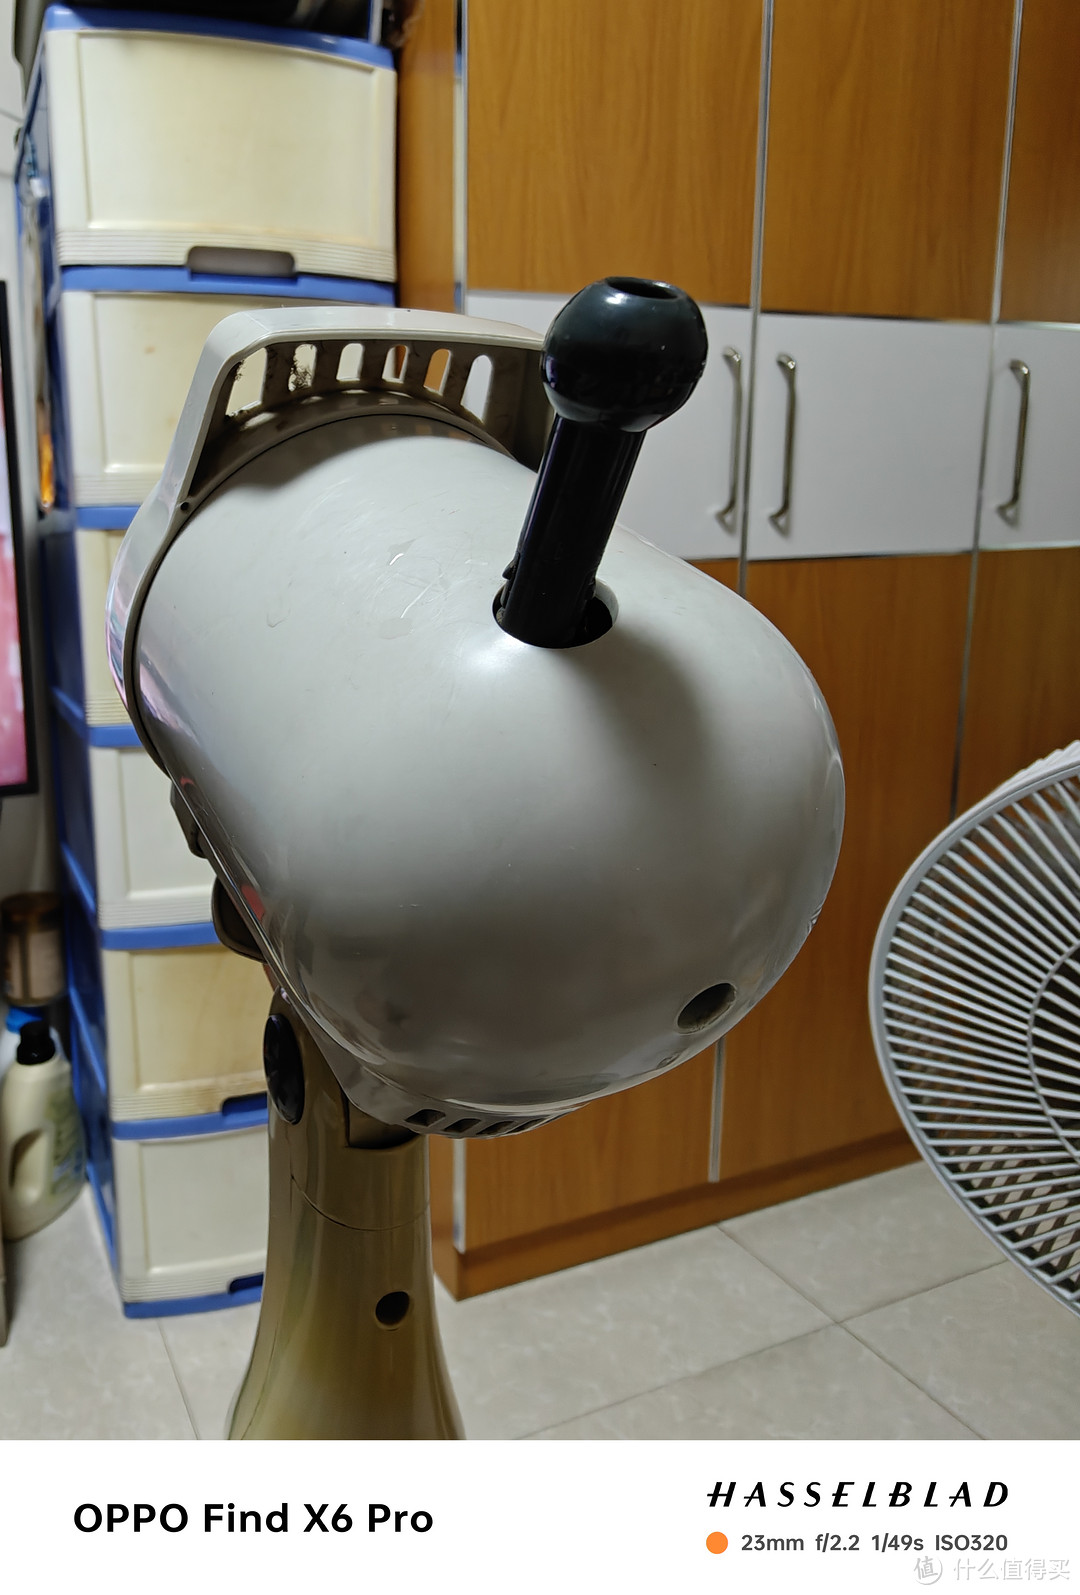  BNN排气扇发现启动困难，拆开清洗之后恢复正常；同时也把电风扇的电容换了，满血复活。